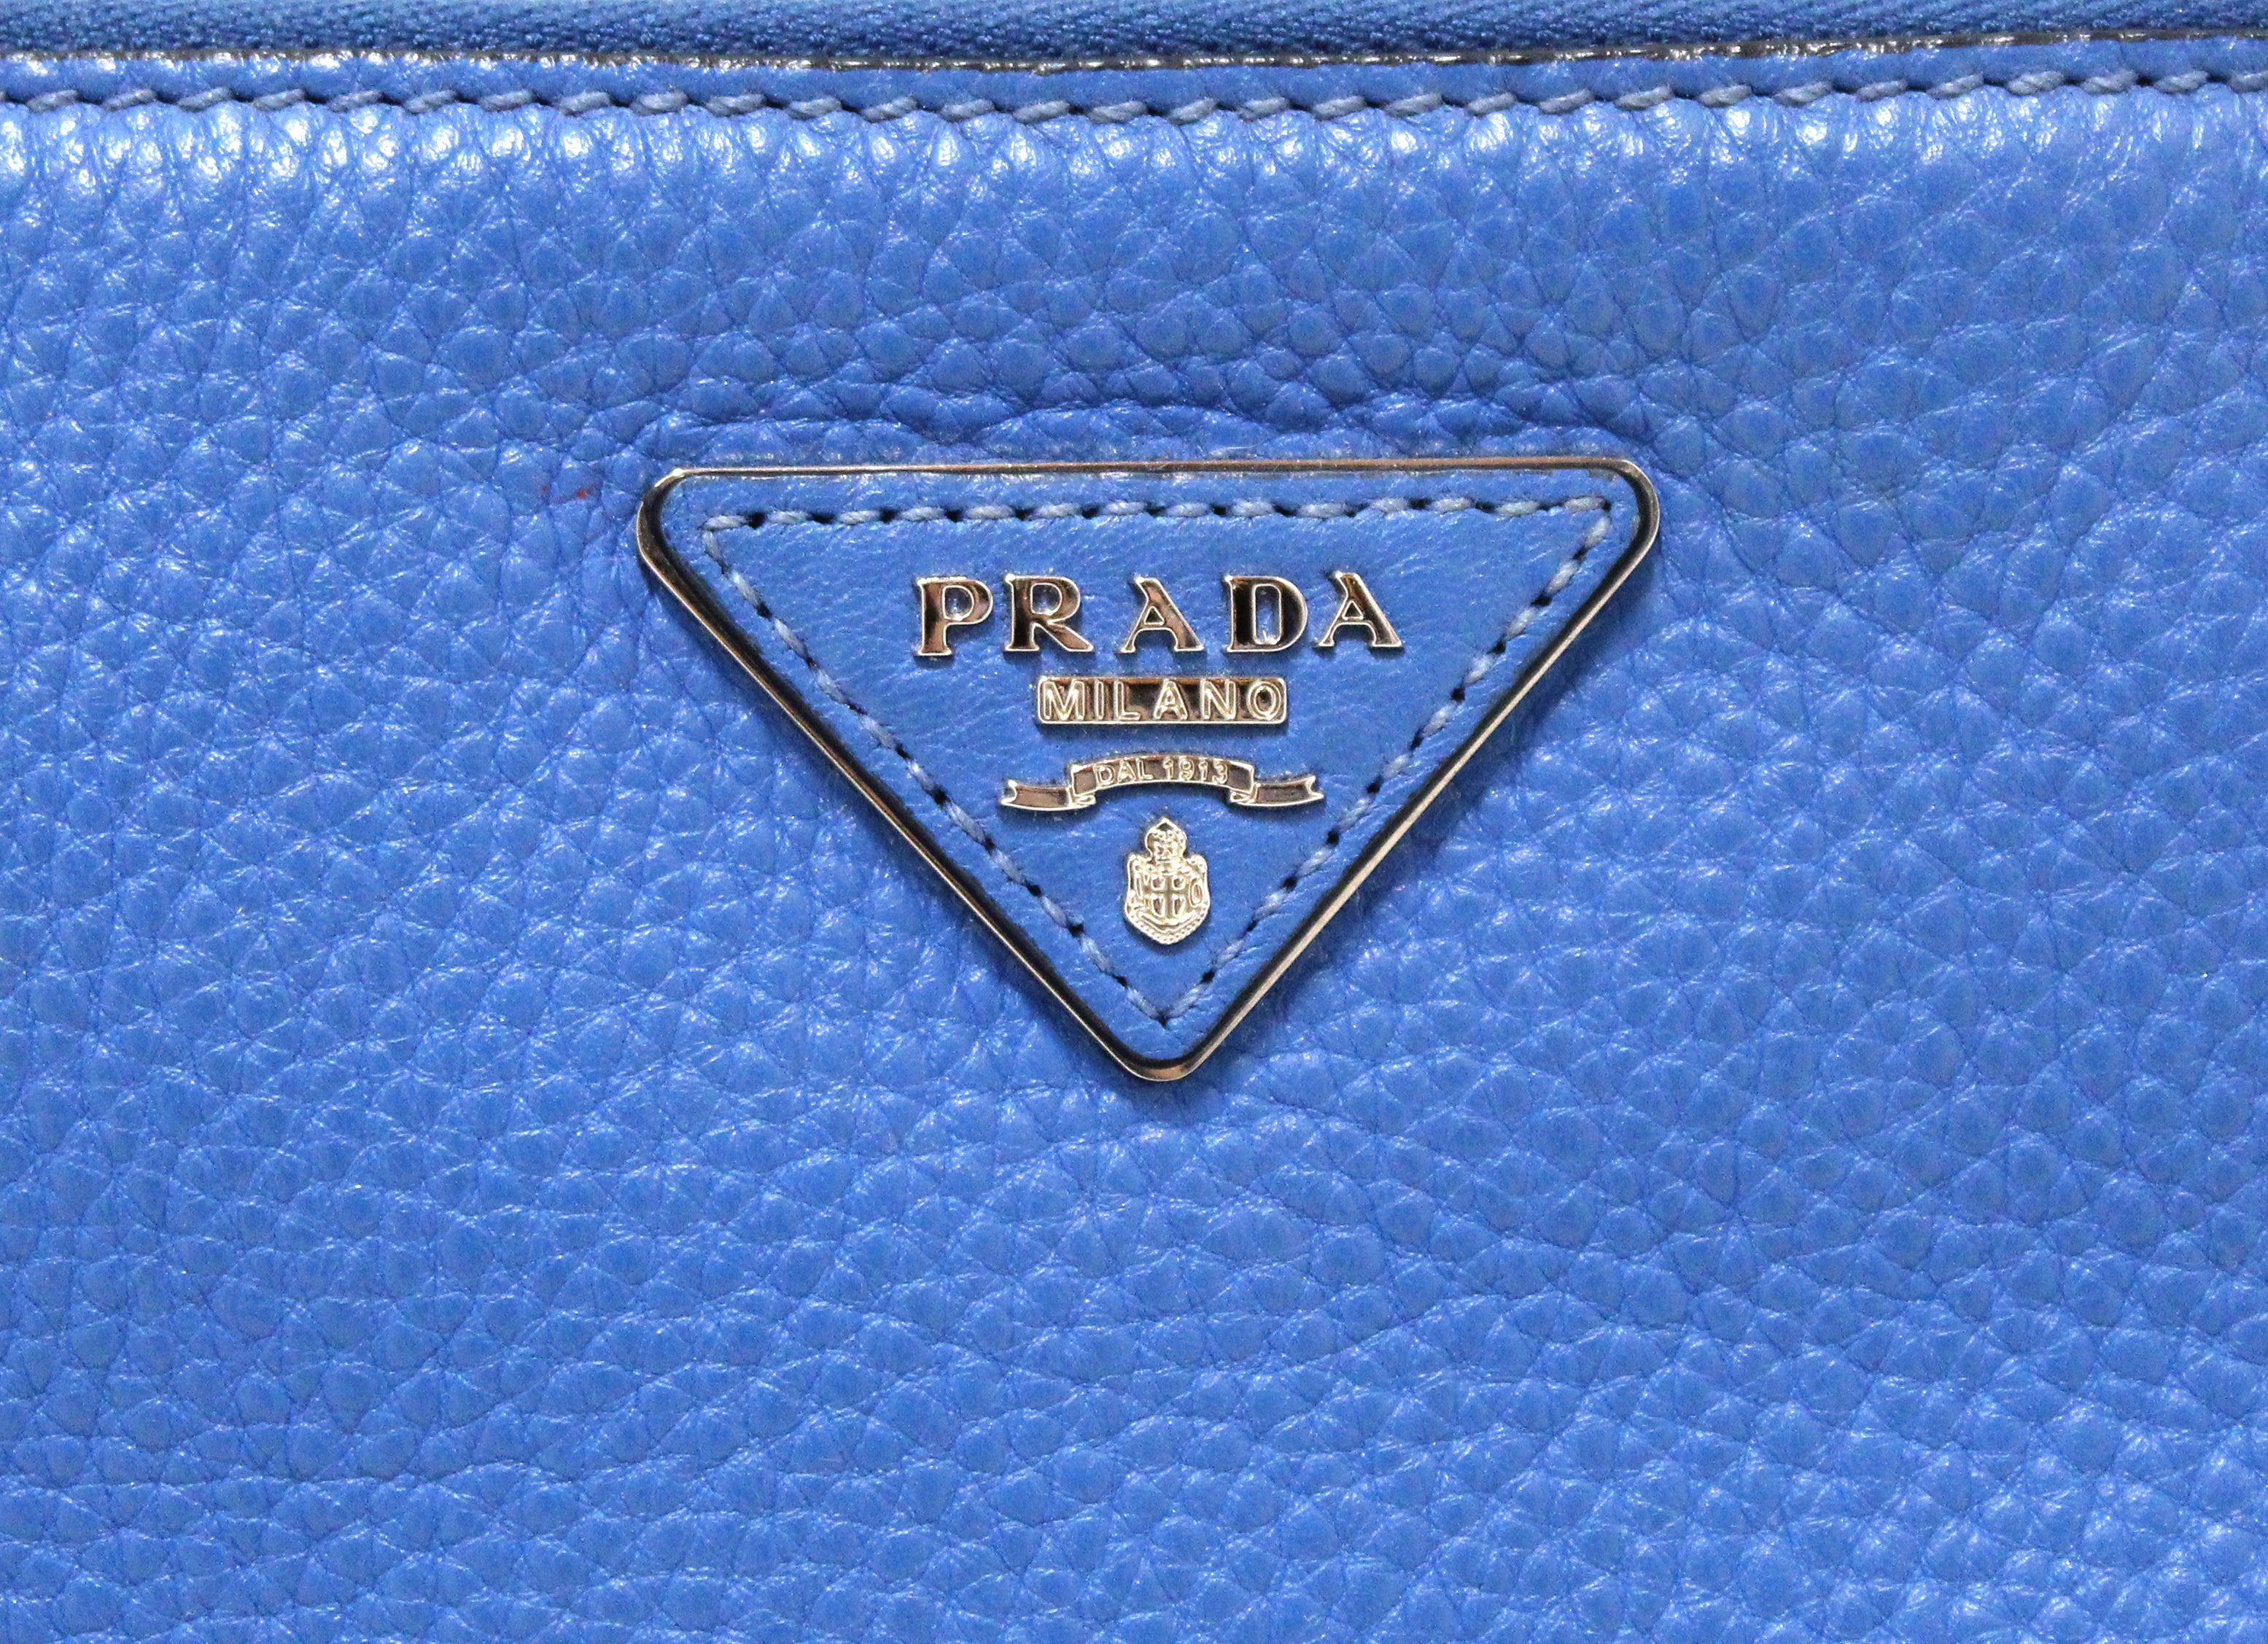 PRADA Saffiano Textured Leather Wristlet Wallet Blue